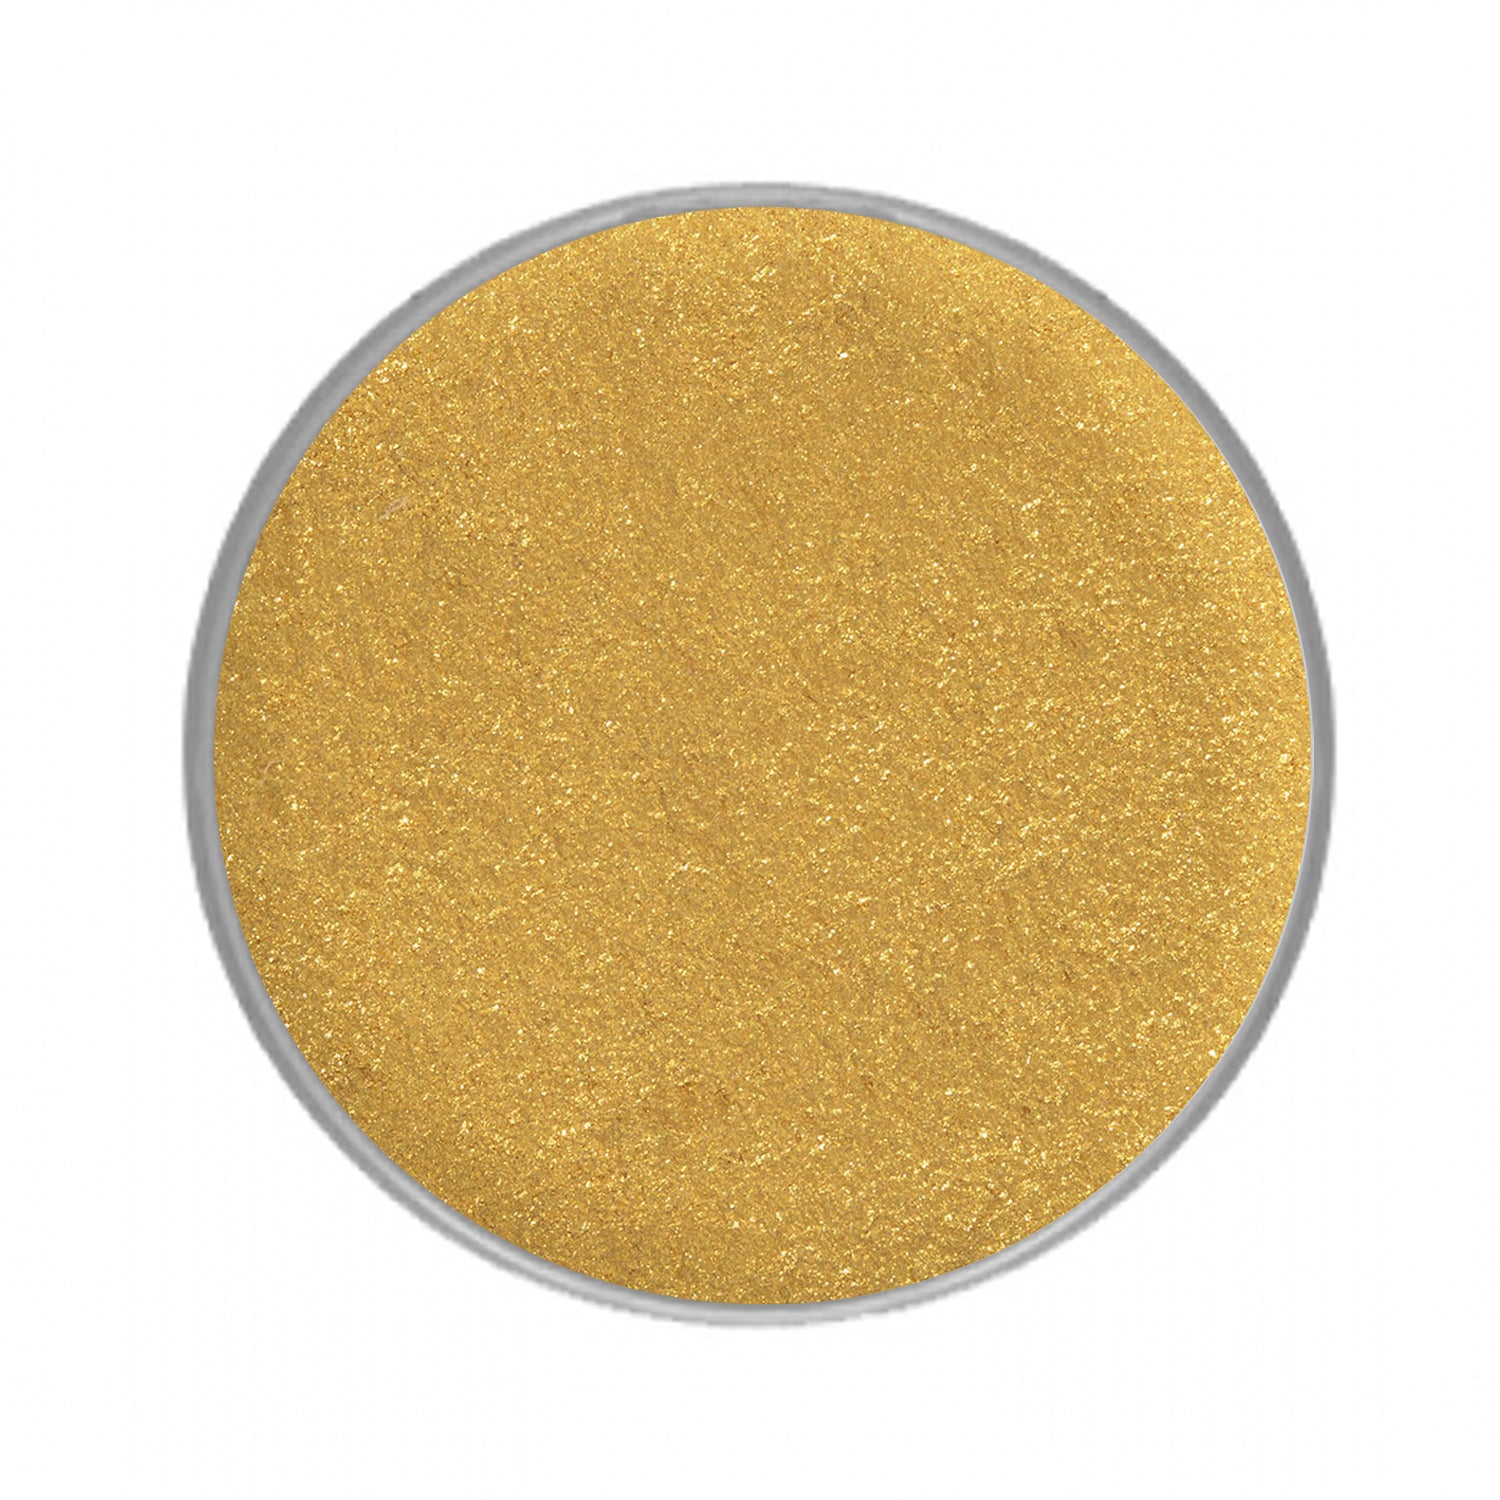 Kryolan Aquacolor - Interferenz Gold (0.25 oz/4 ml)